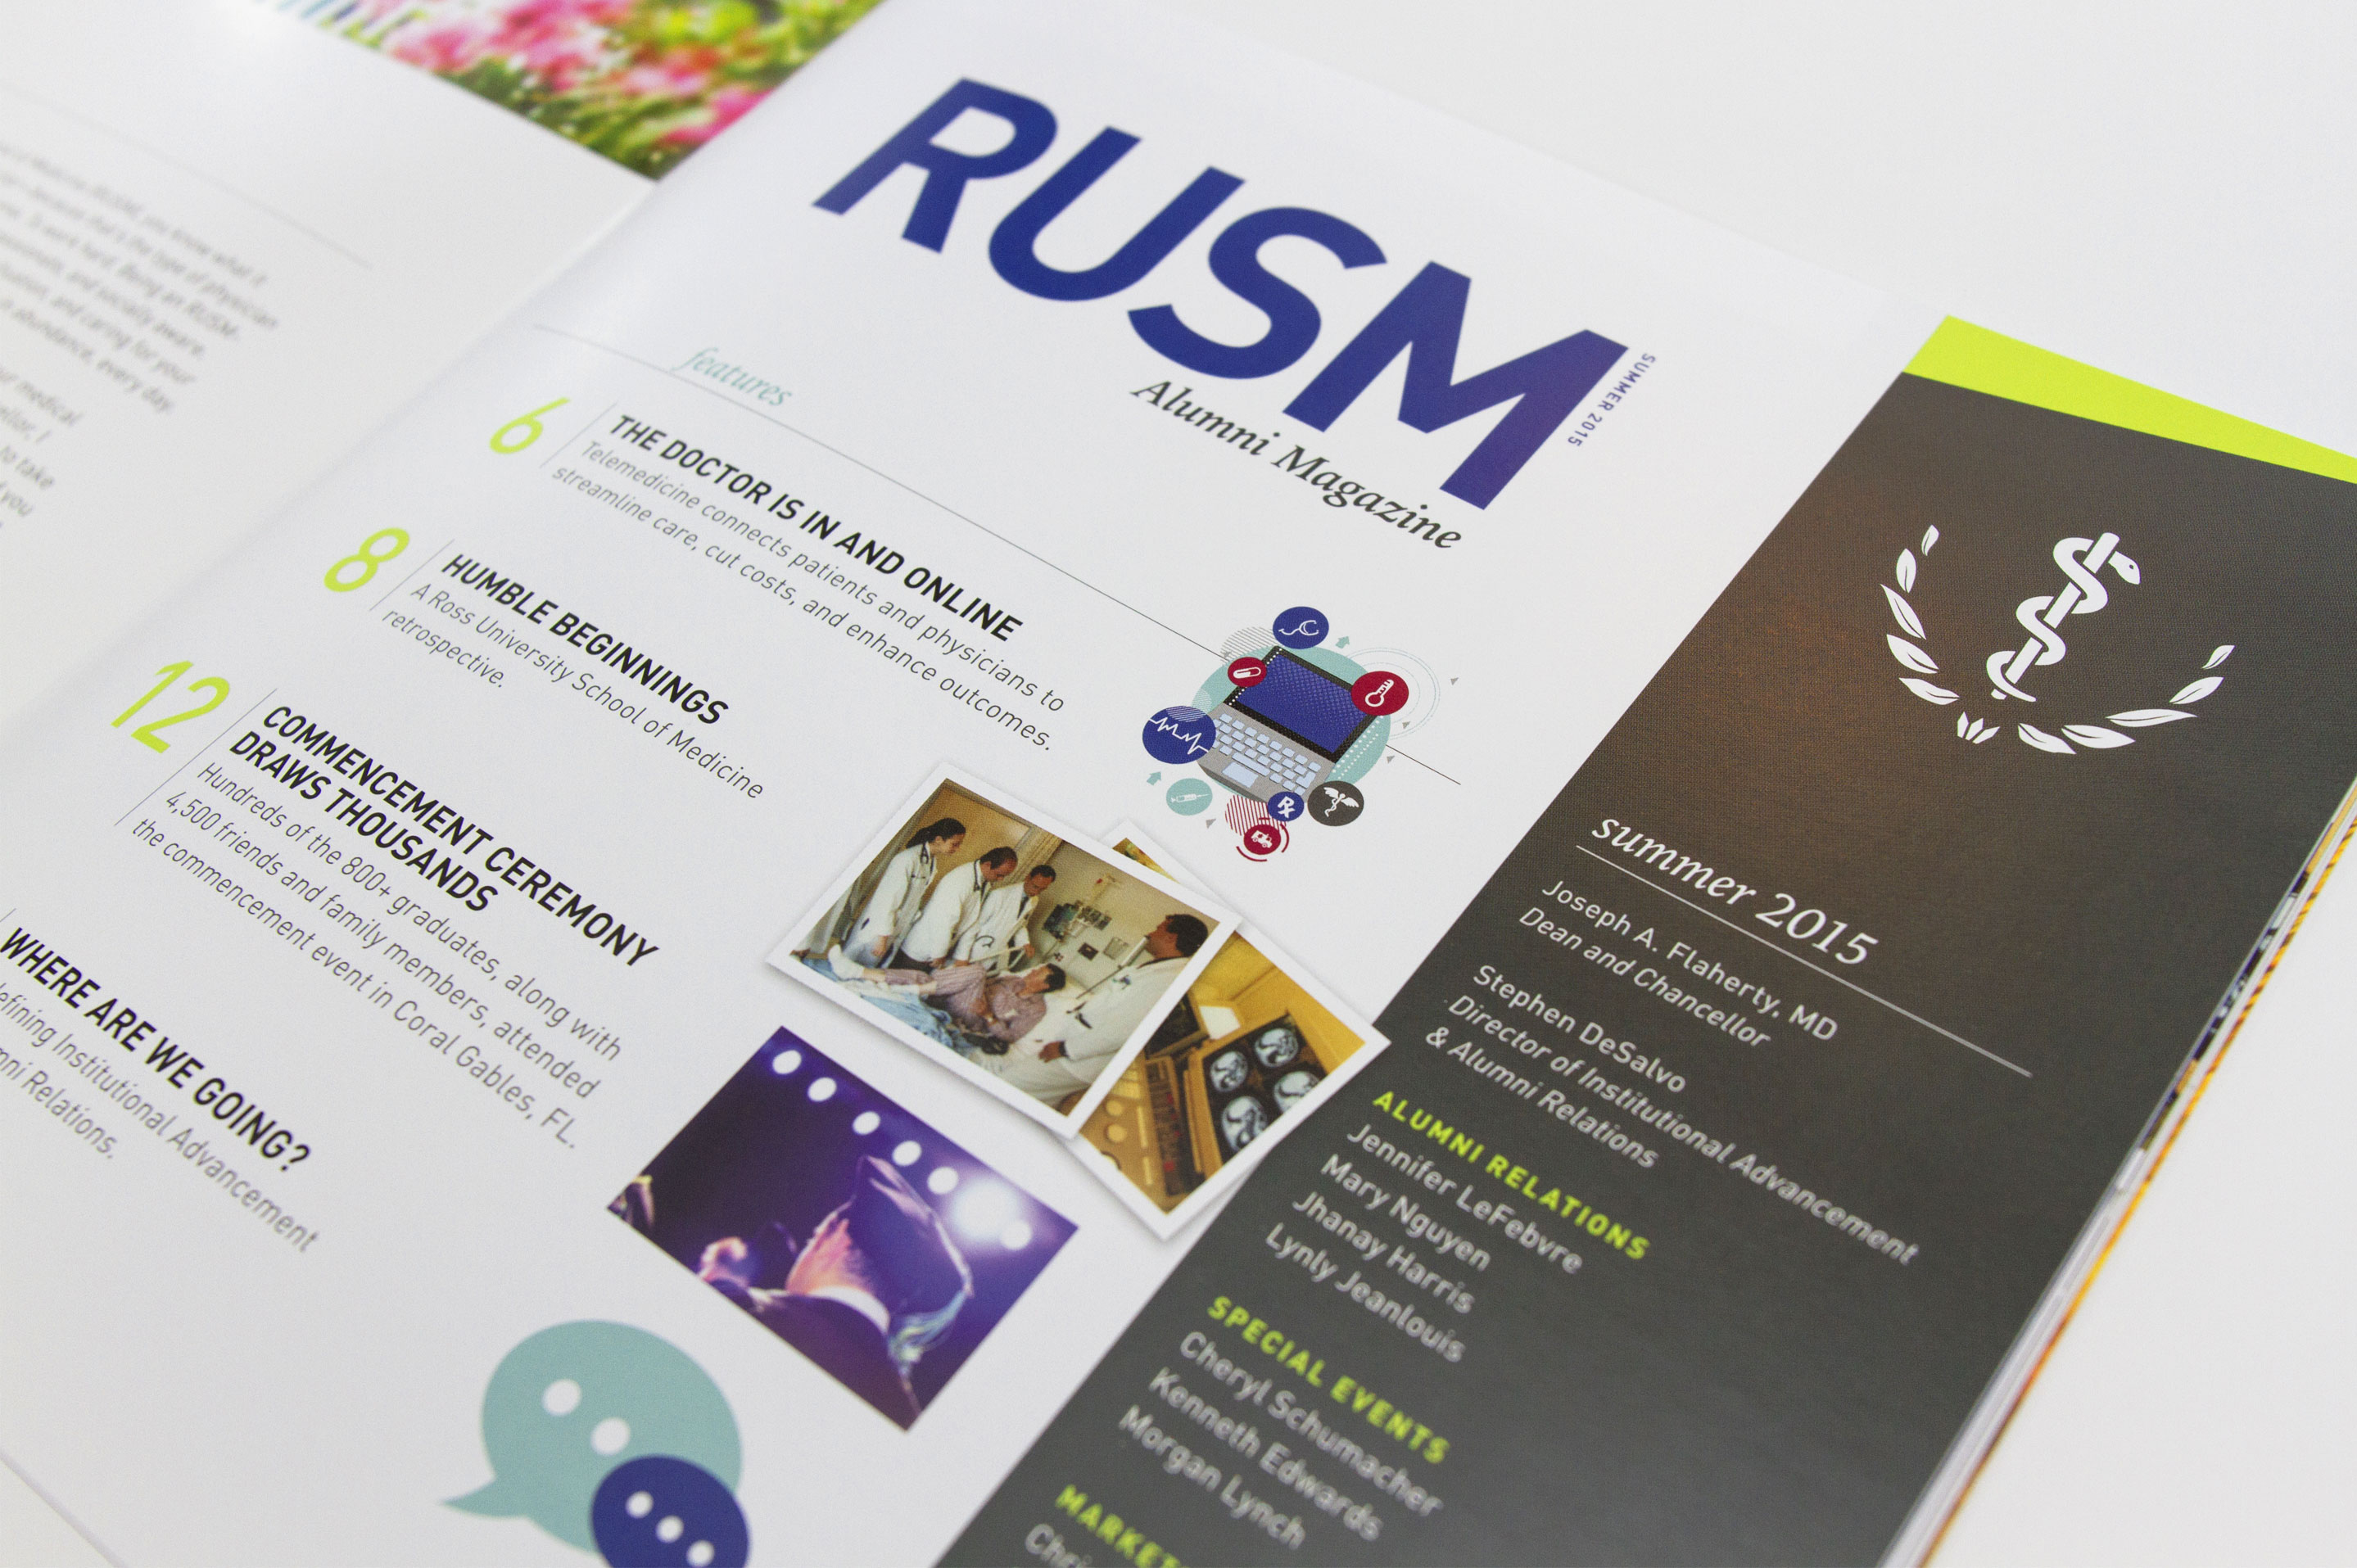 Ross University School of Medicine alumni magazine